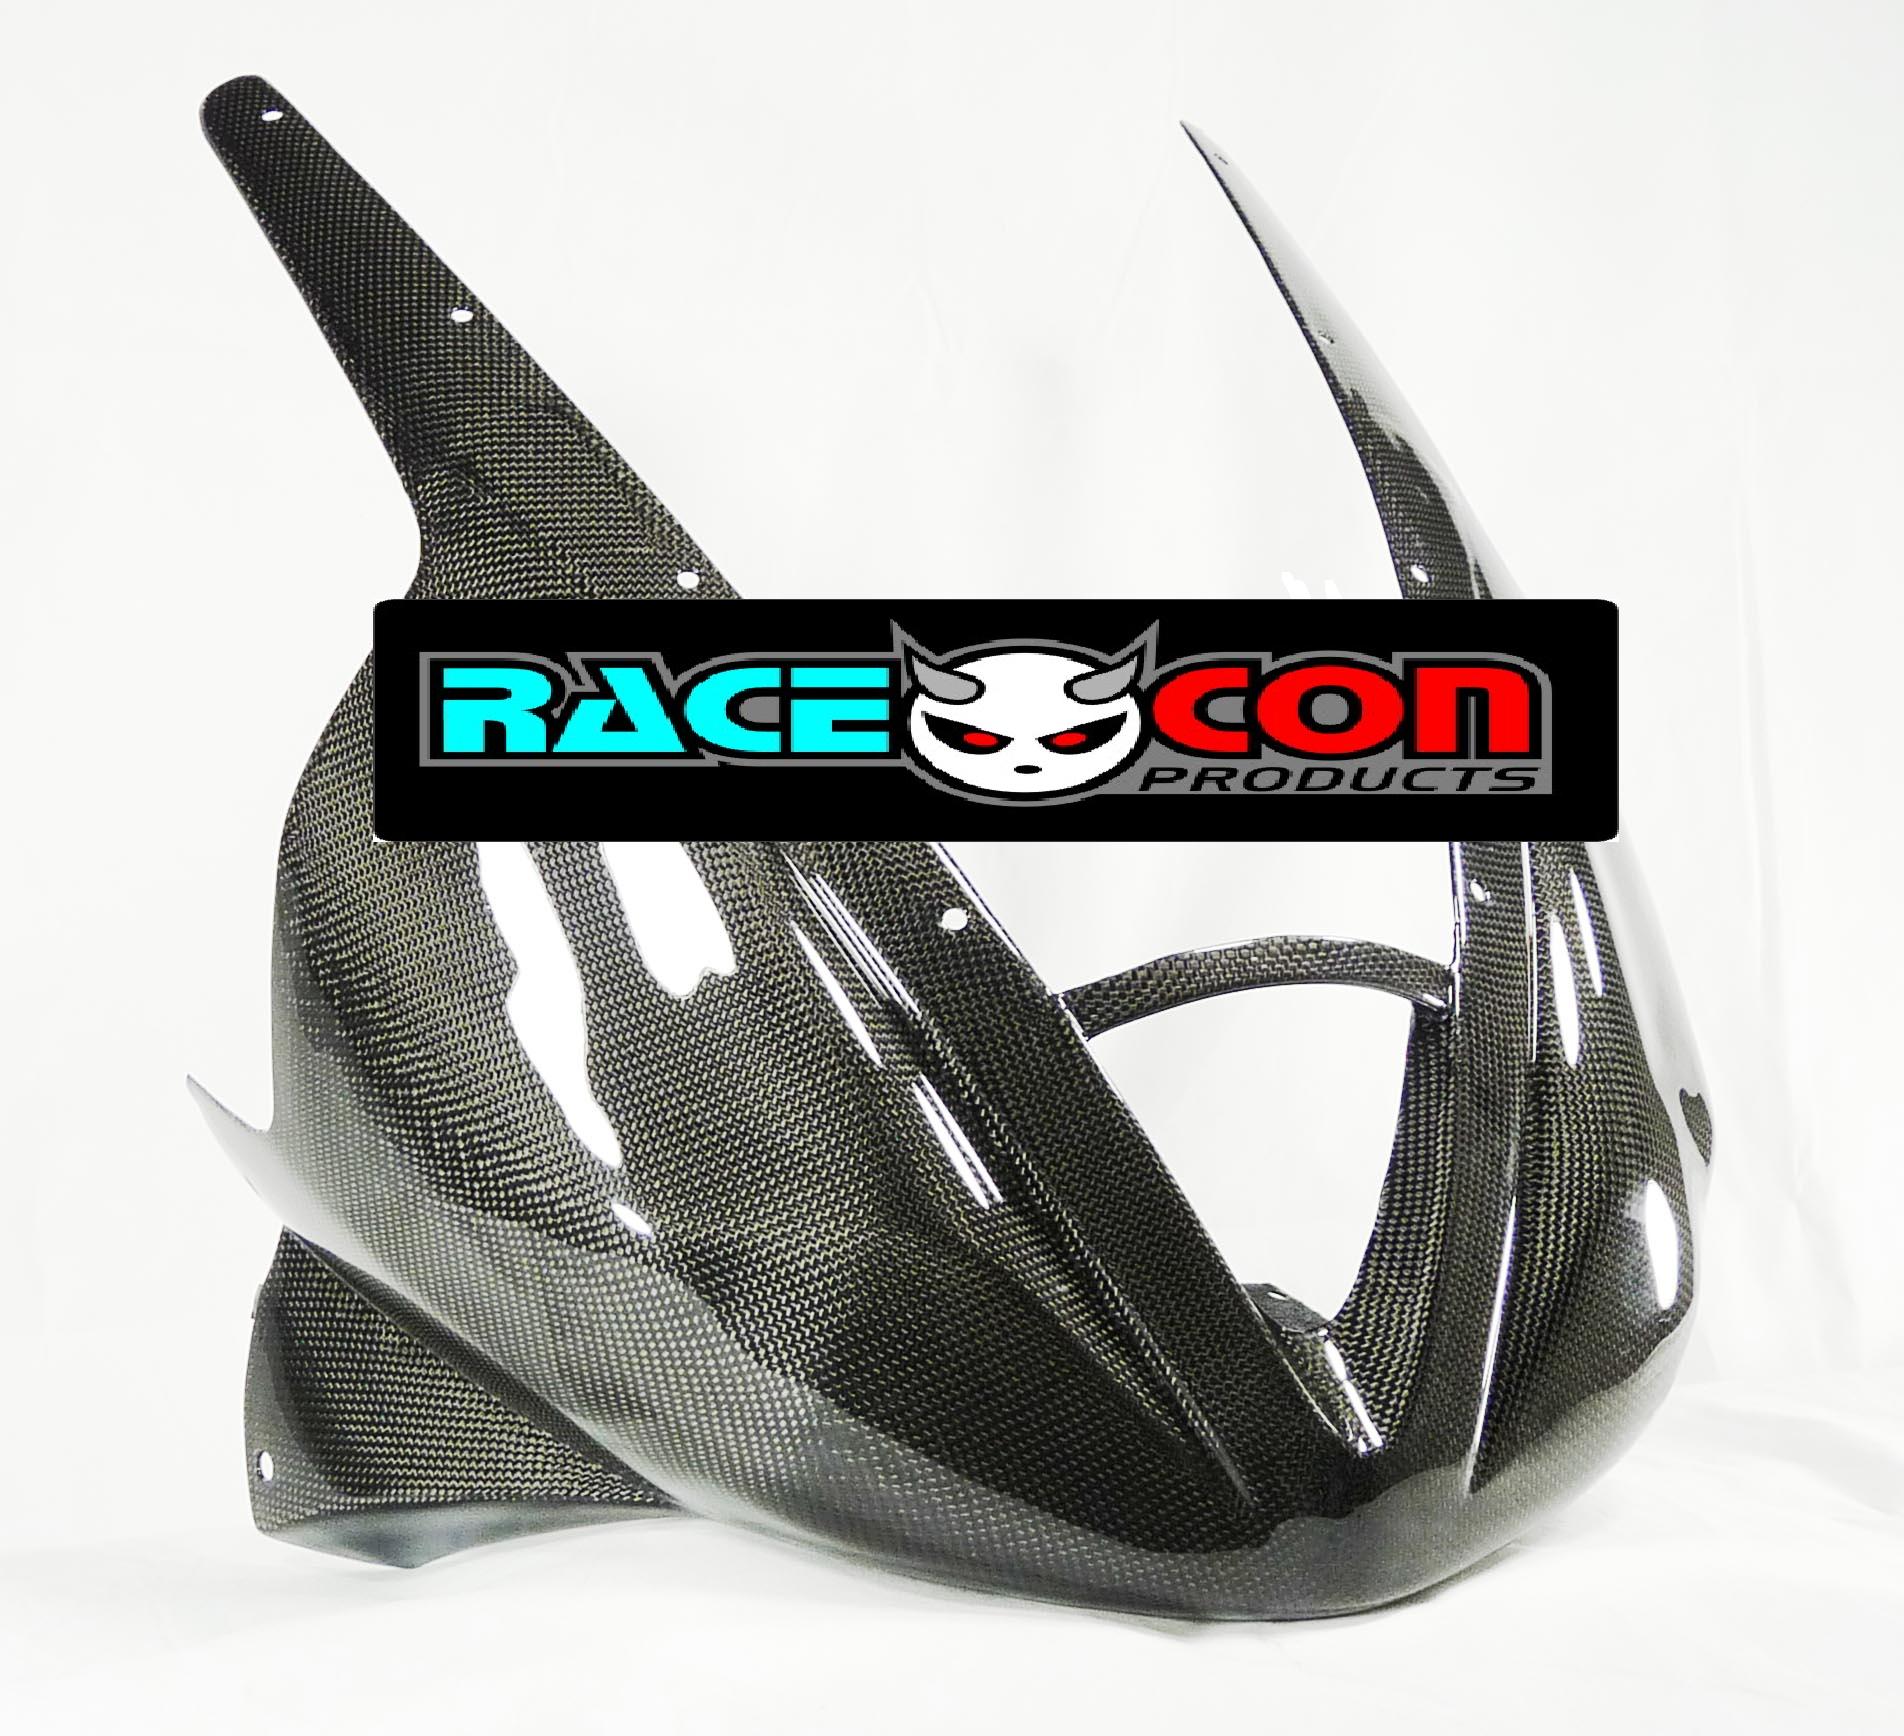 675 Race nose